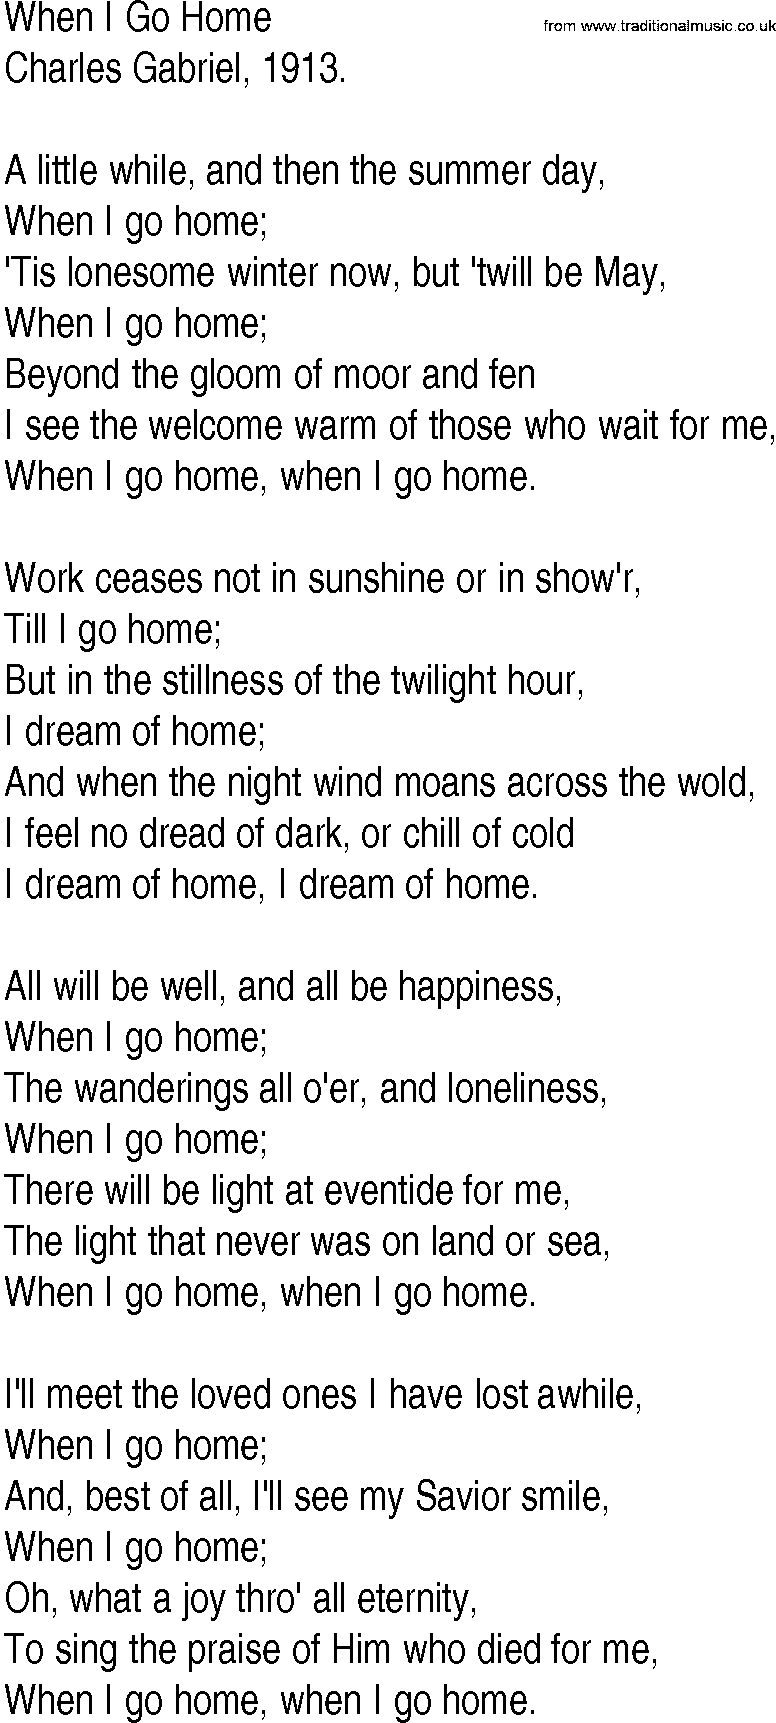 Hymn and Gospel Song: When I Go Home by Charles Gabriel lyrics